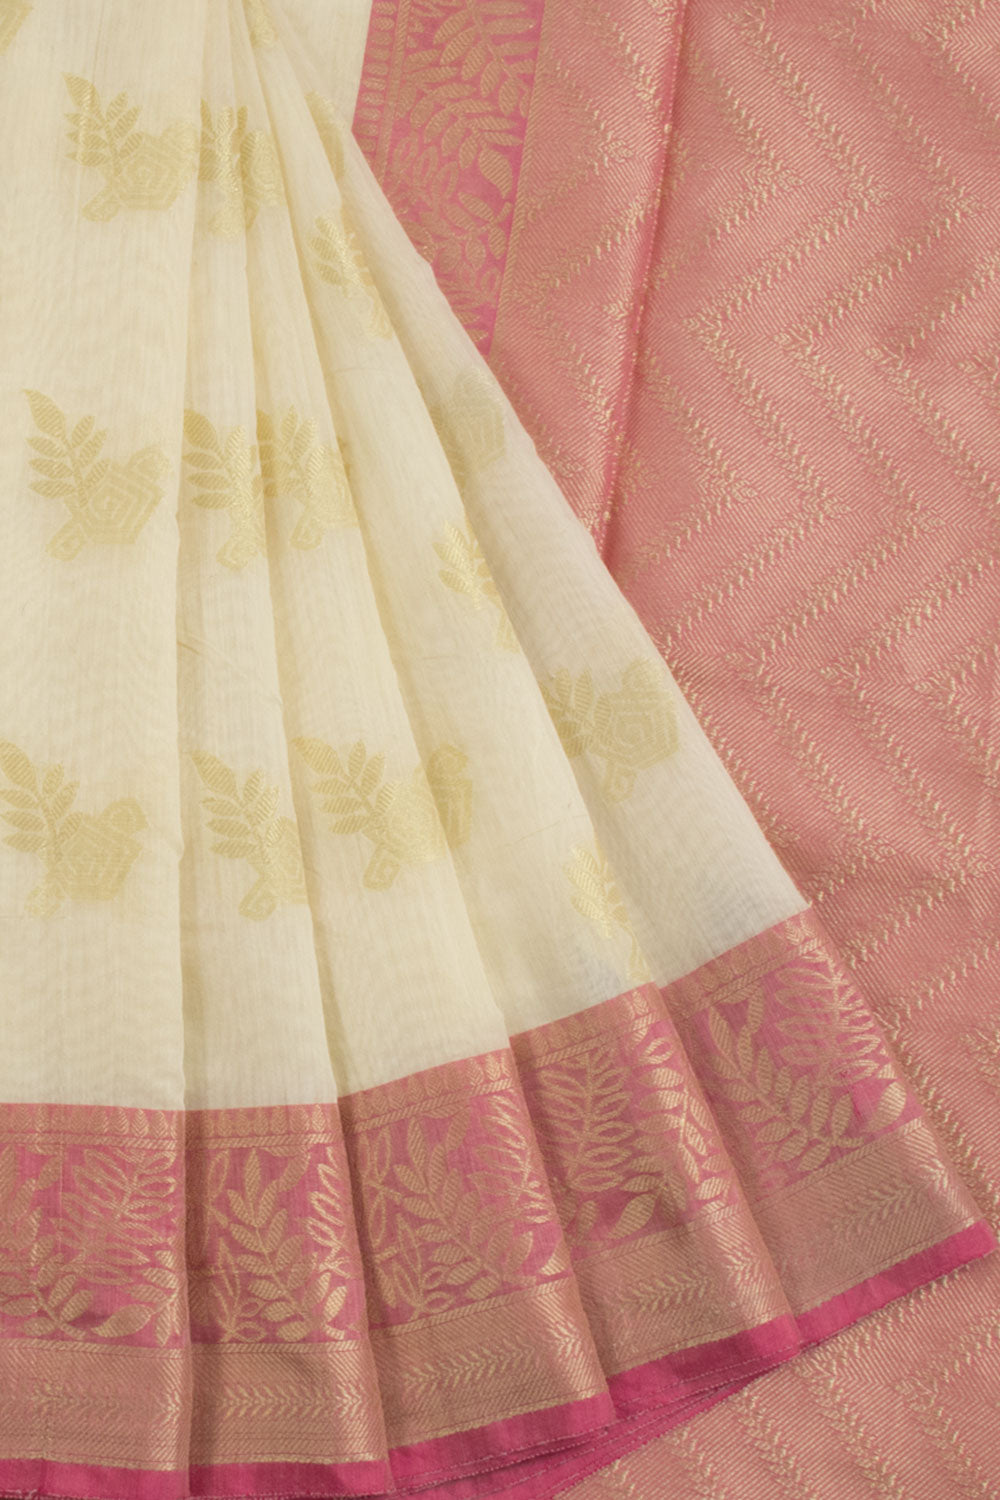 Handloom Banarasi Cotton Saree with Floral Motifs, Floral Border and Pallu